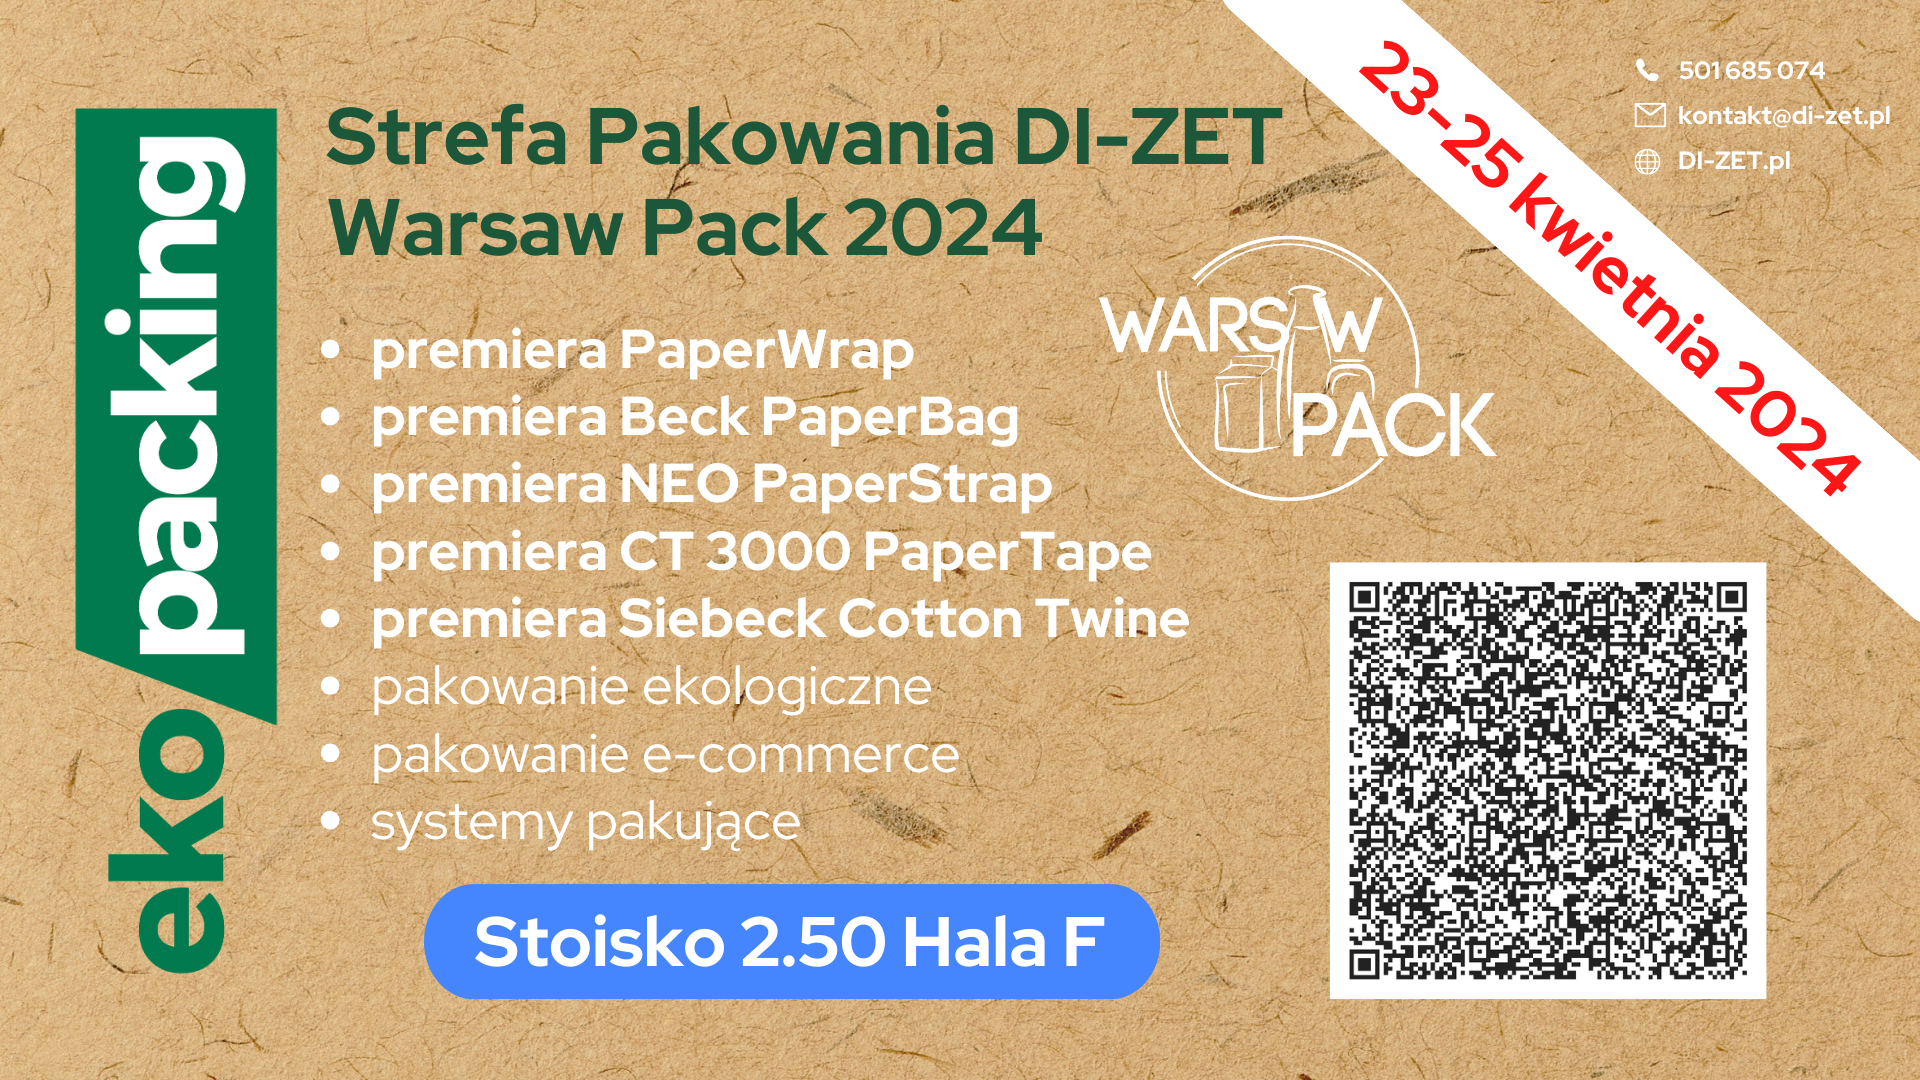 Targi Warsaw Pack 2024 - Strefa Pakowania DI-ZET